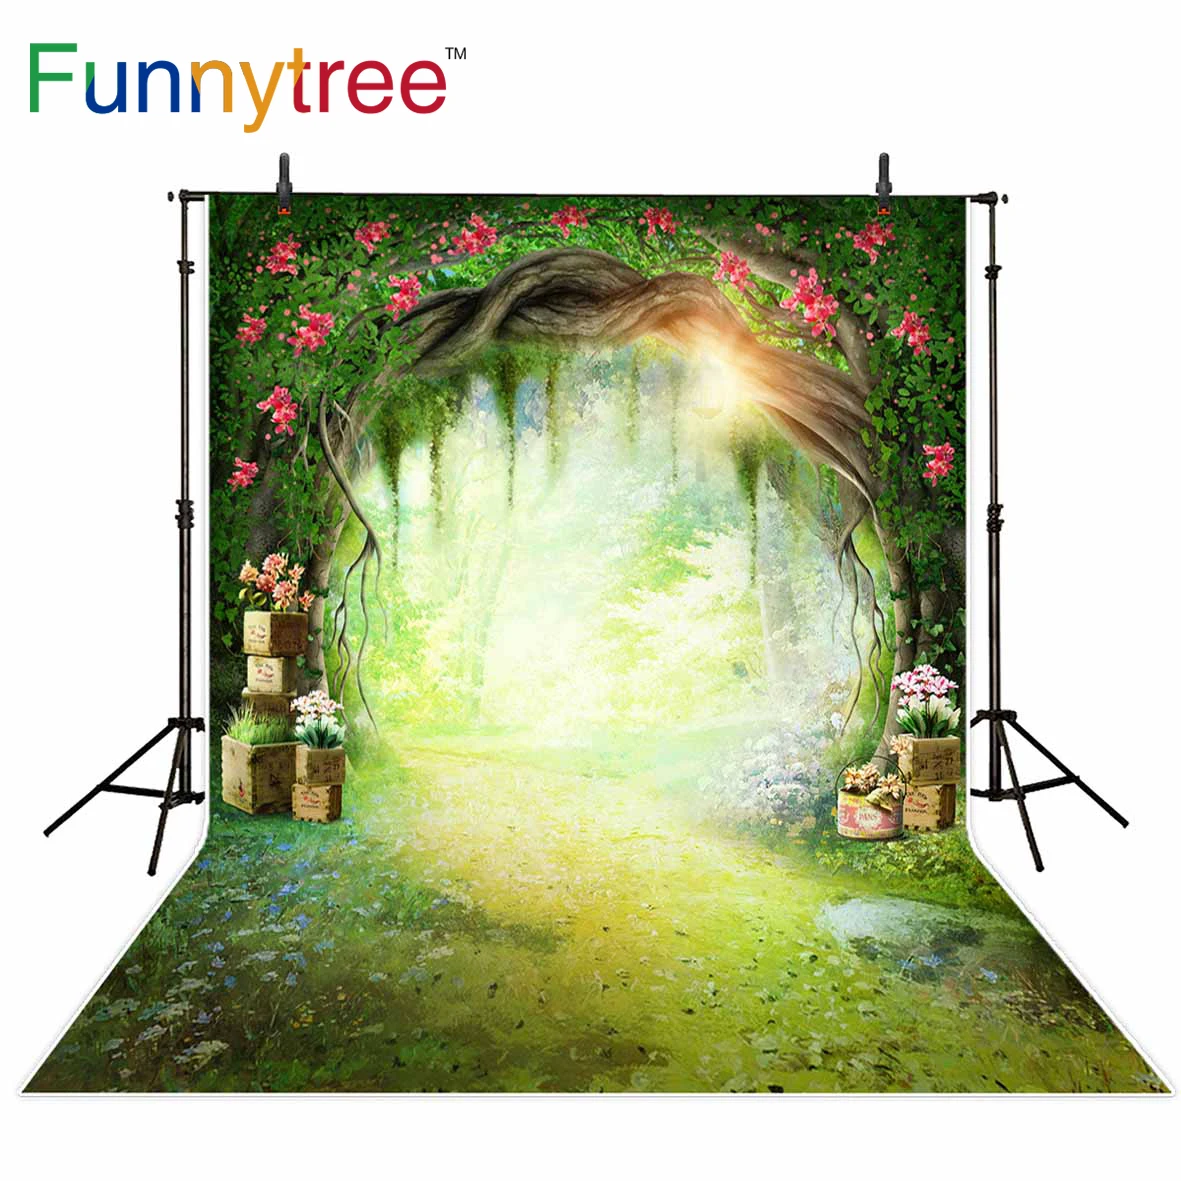 Funnytree фото фон Весенний лес Сказочный цветок акварель Алиса в стране чудес вечерние Фотофон фотография